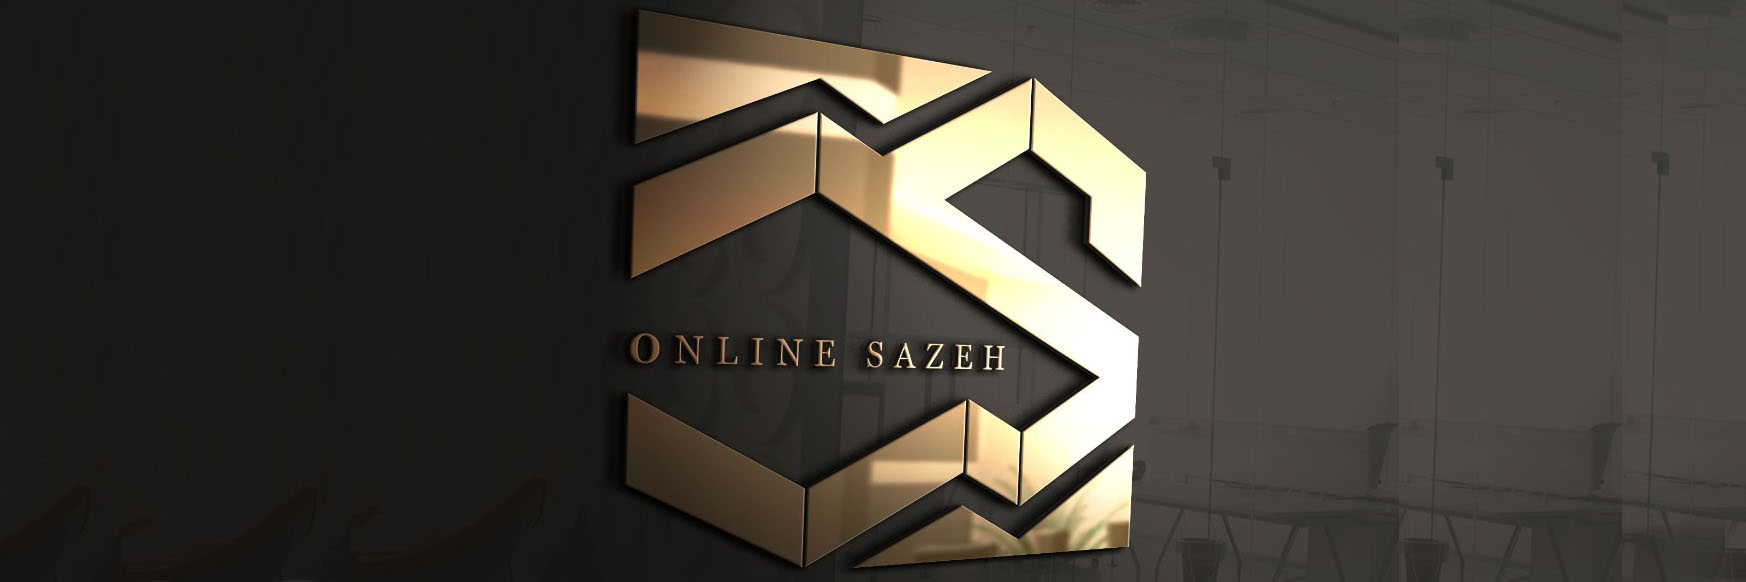 online sazeh exhibition online